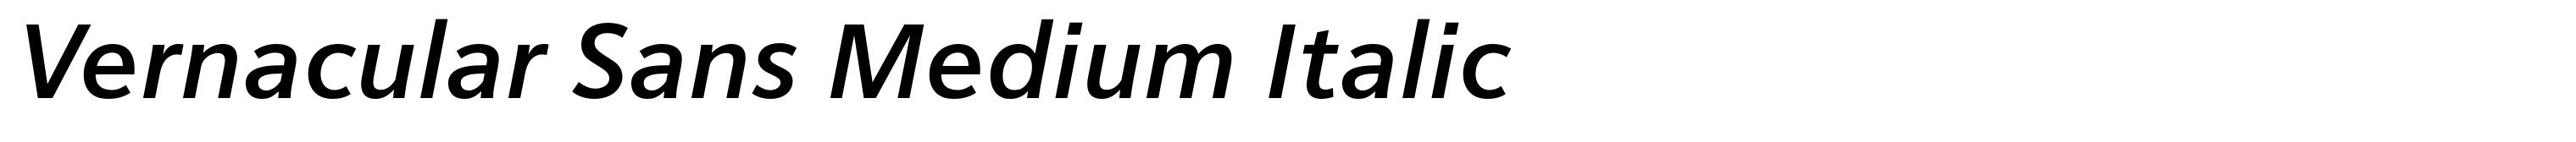 Vernacular Sans Medium Italic